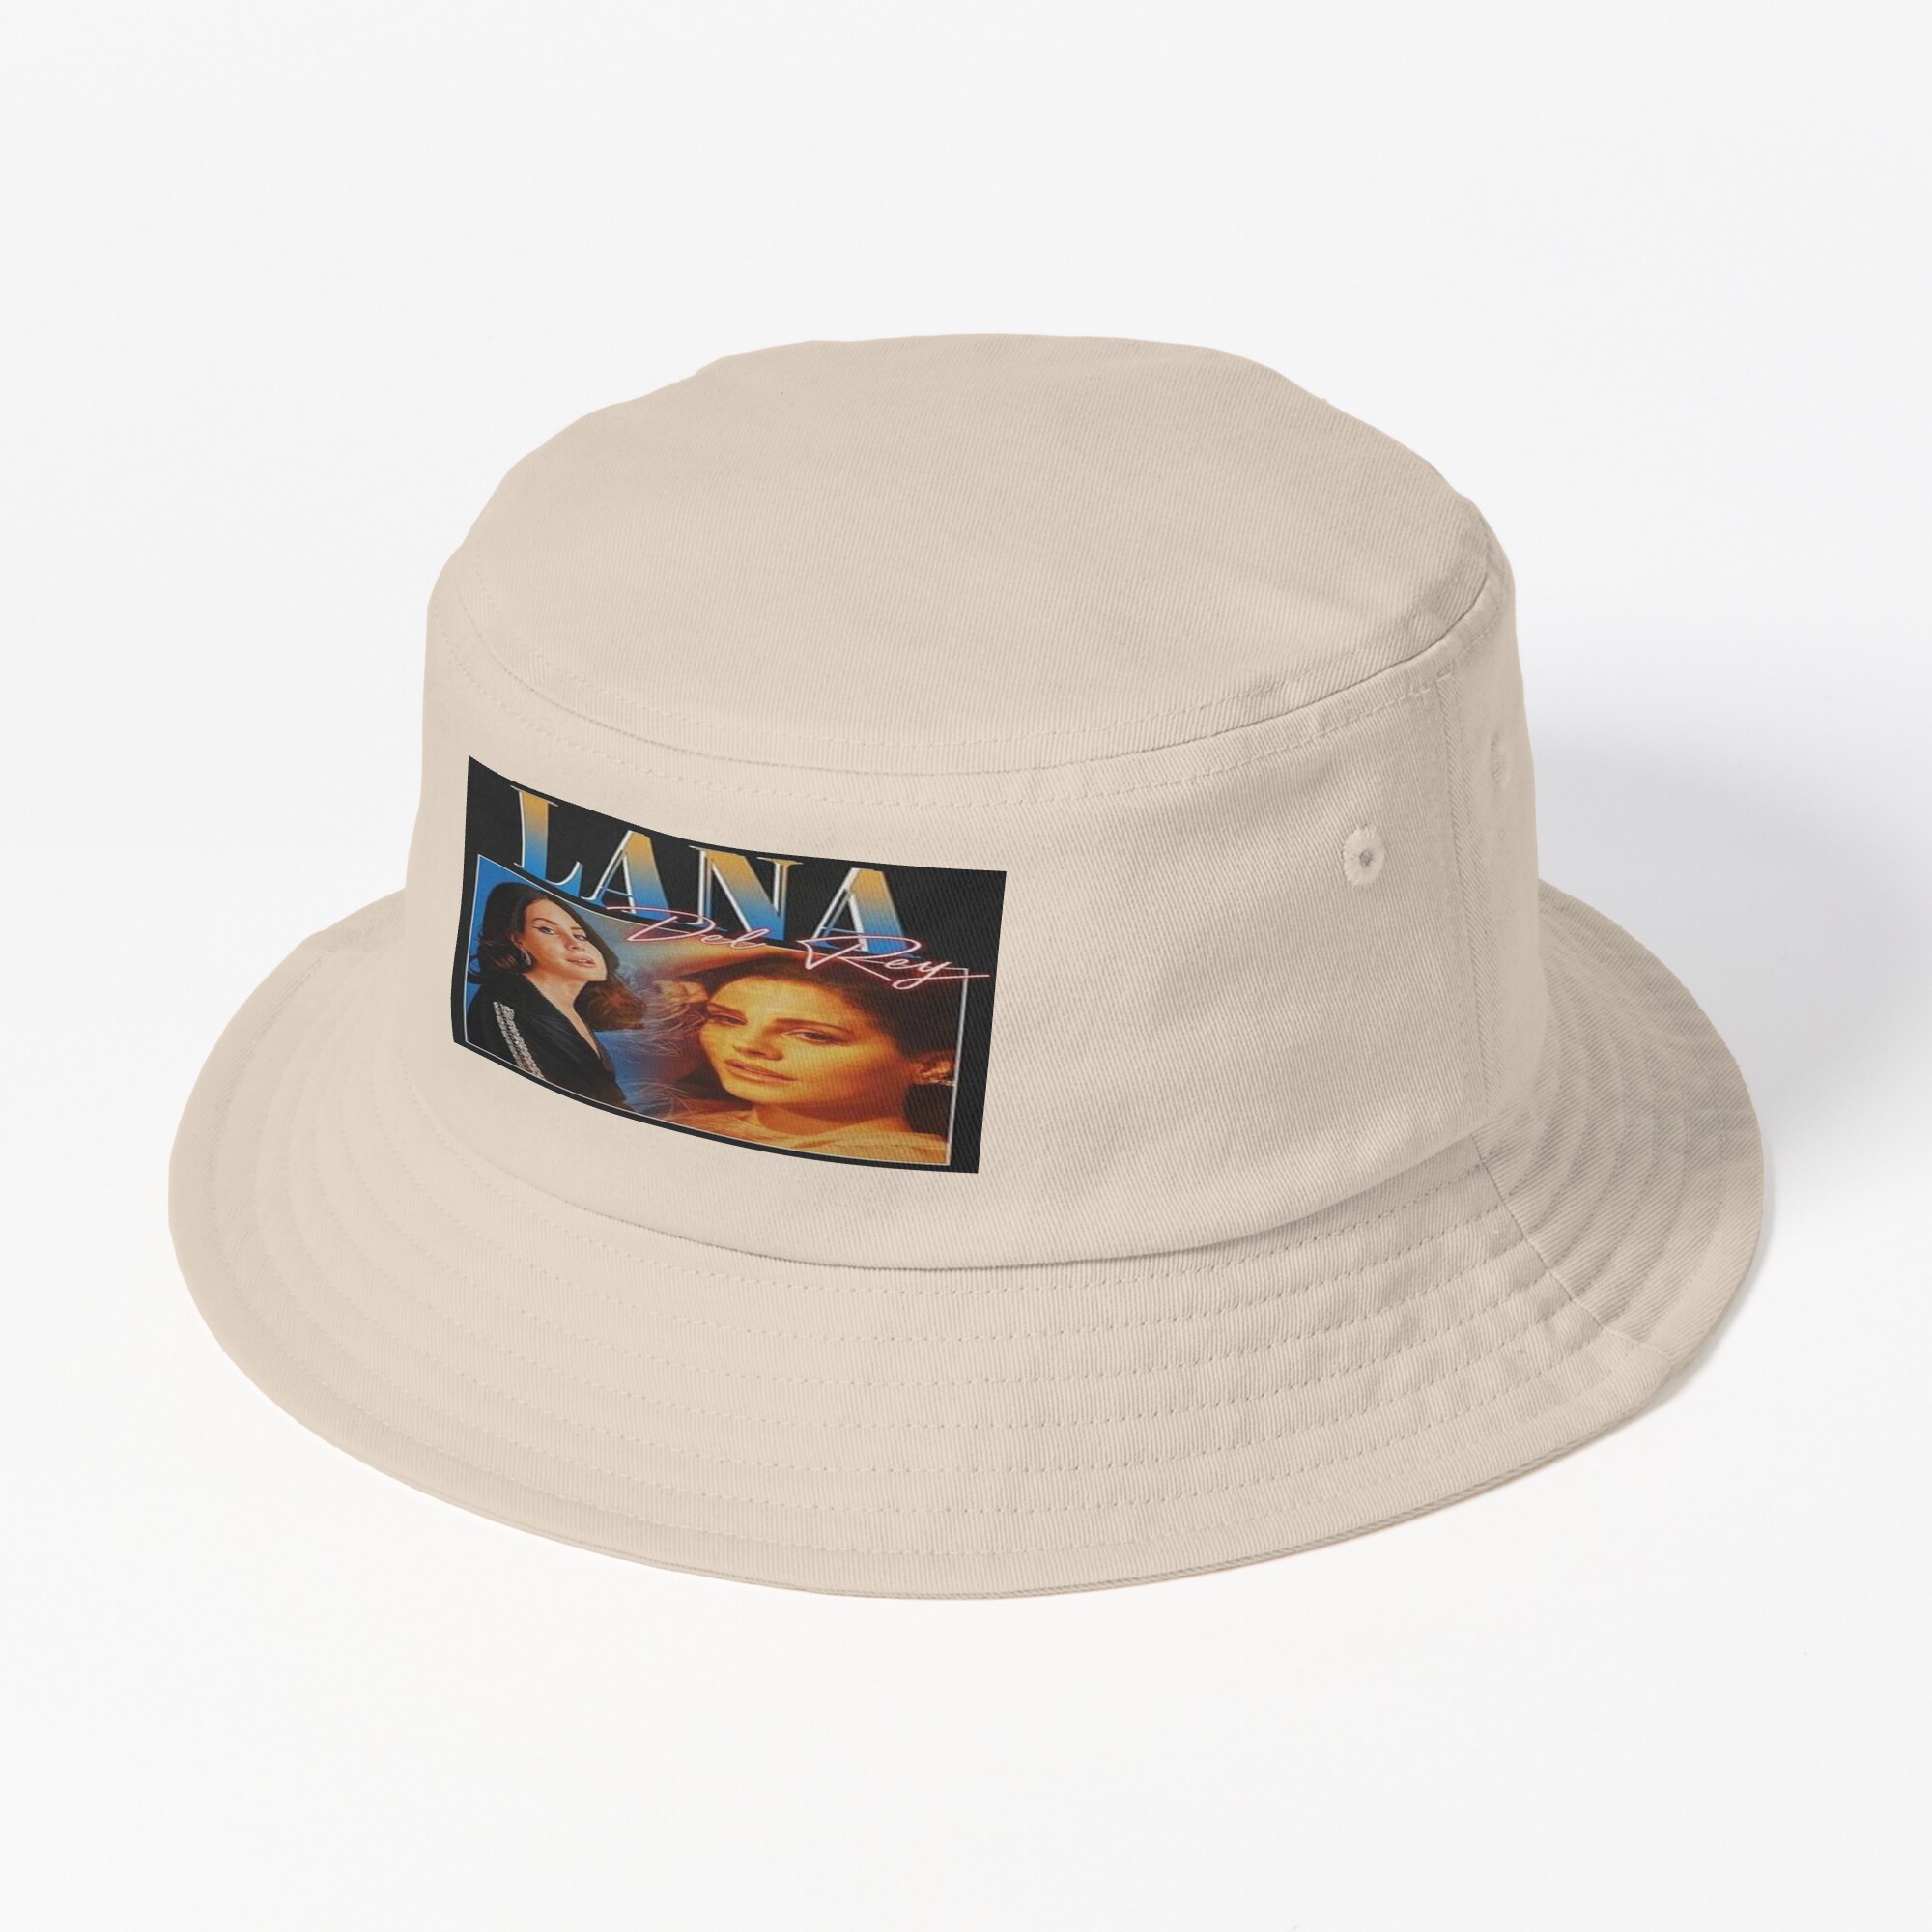 ssrcobucket hatproducte5d6c5f62bbf65eeprimarysquare2000x2000 bgf8f8f8 1 - Lana Del Rey Merch